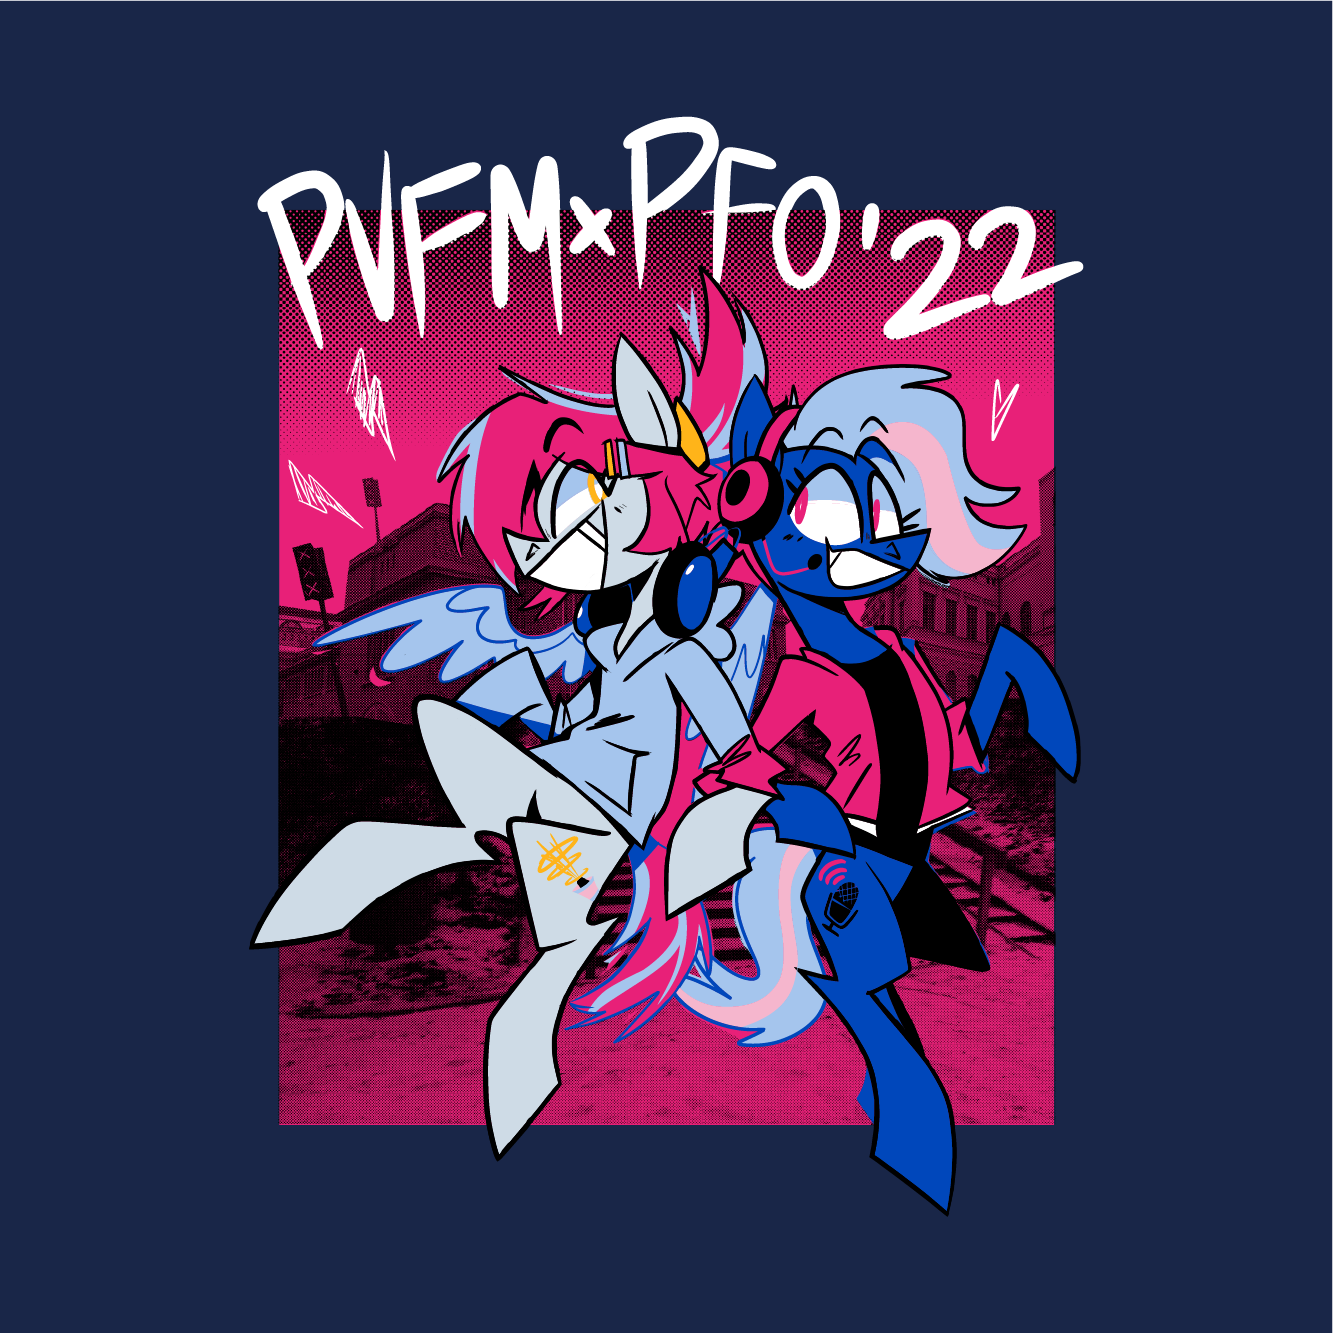 PonyFest × PVFM Concert 2022 - The Trevor Project Fundraiser shirt design - zoomed